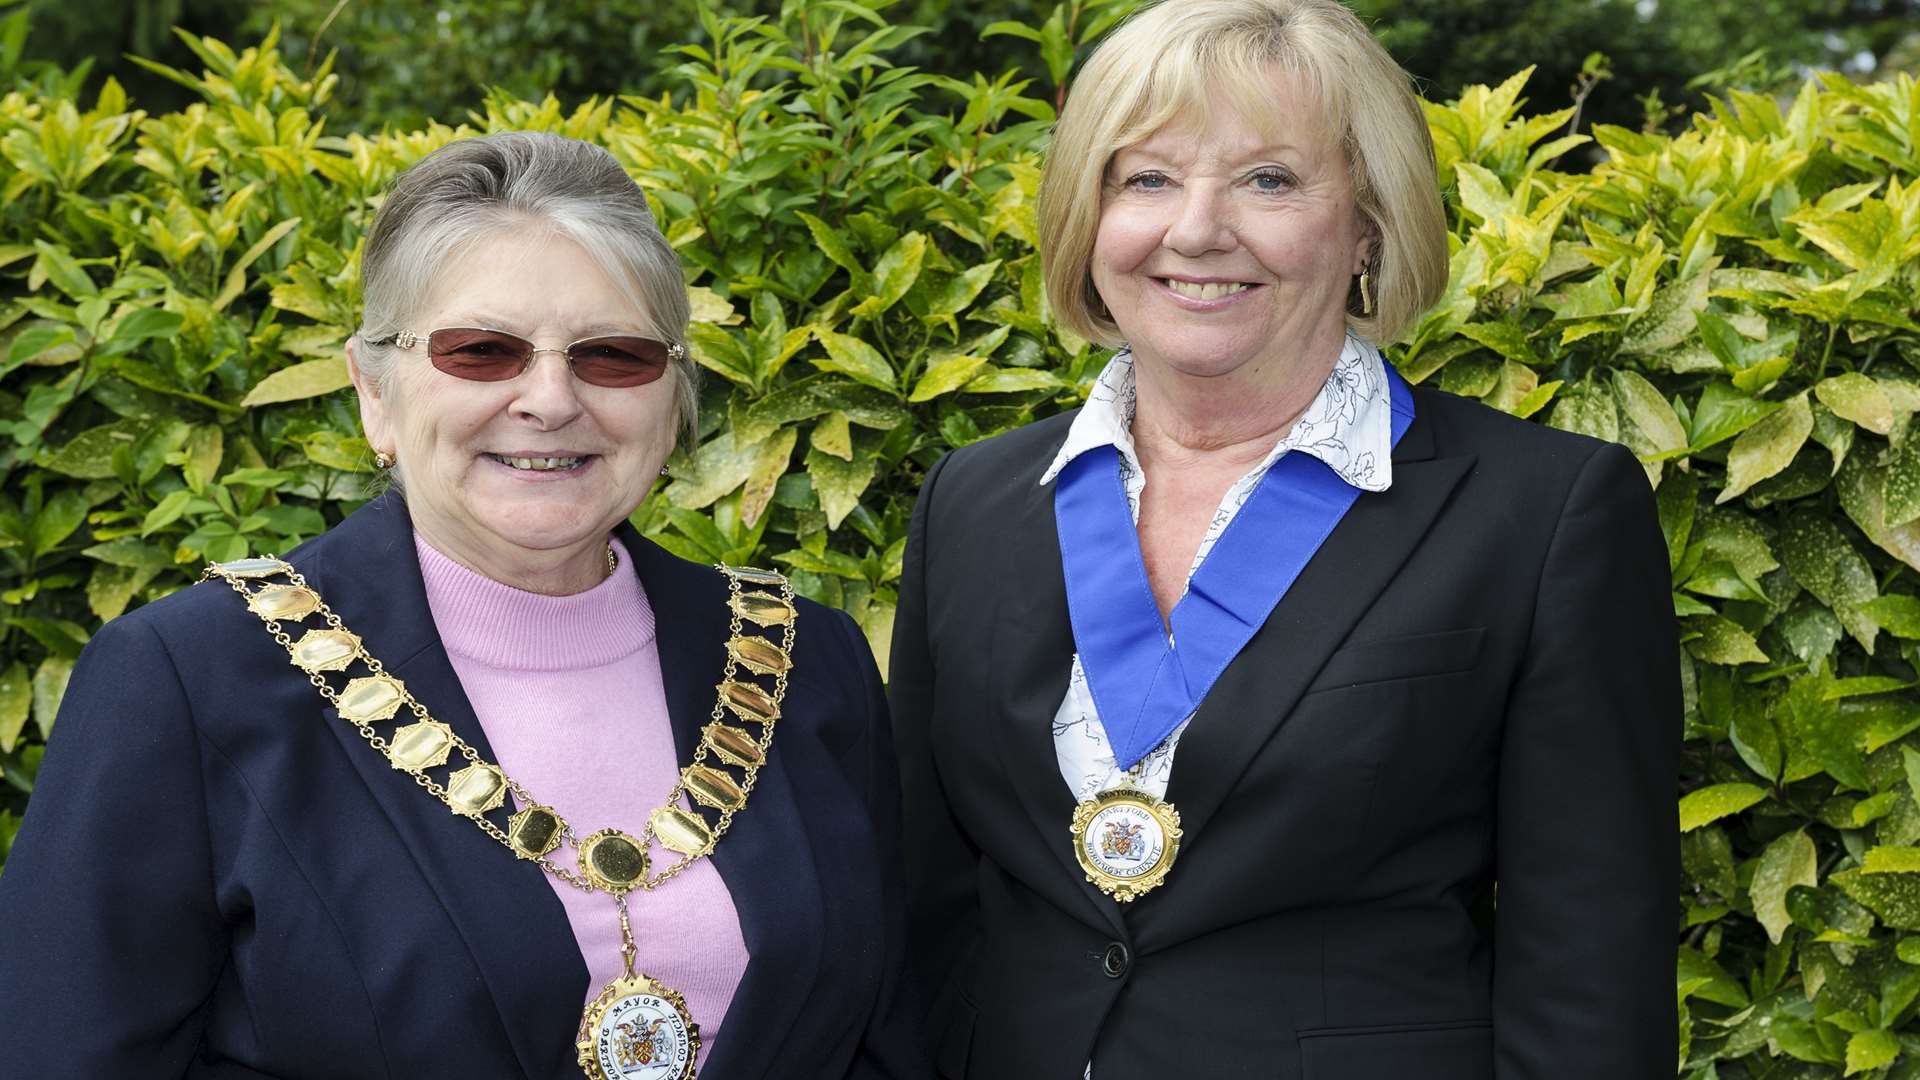 Cllr Rosanna Currans, the newly elected mayor of Dartford, with mayor's escort Corinna Bailey, right